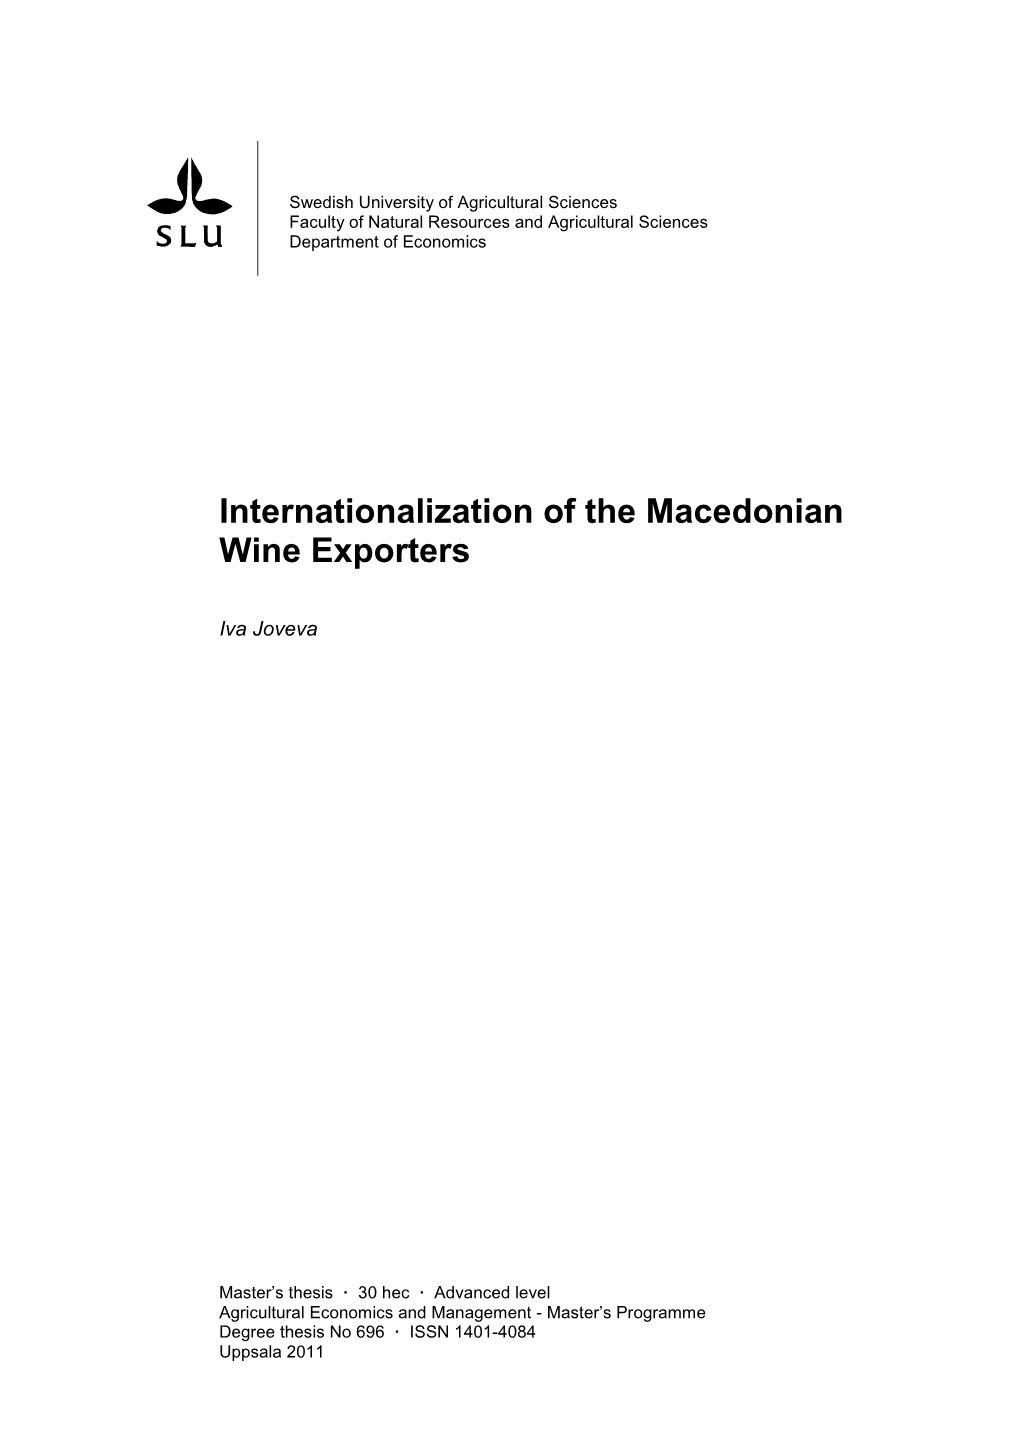 Internationalization of the Macedonian Wine Exporters